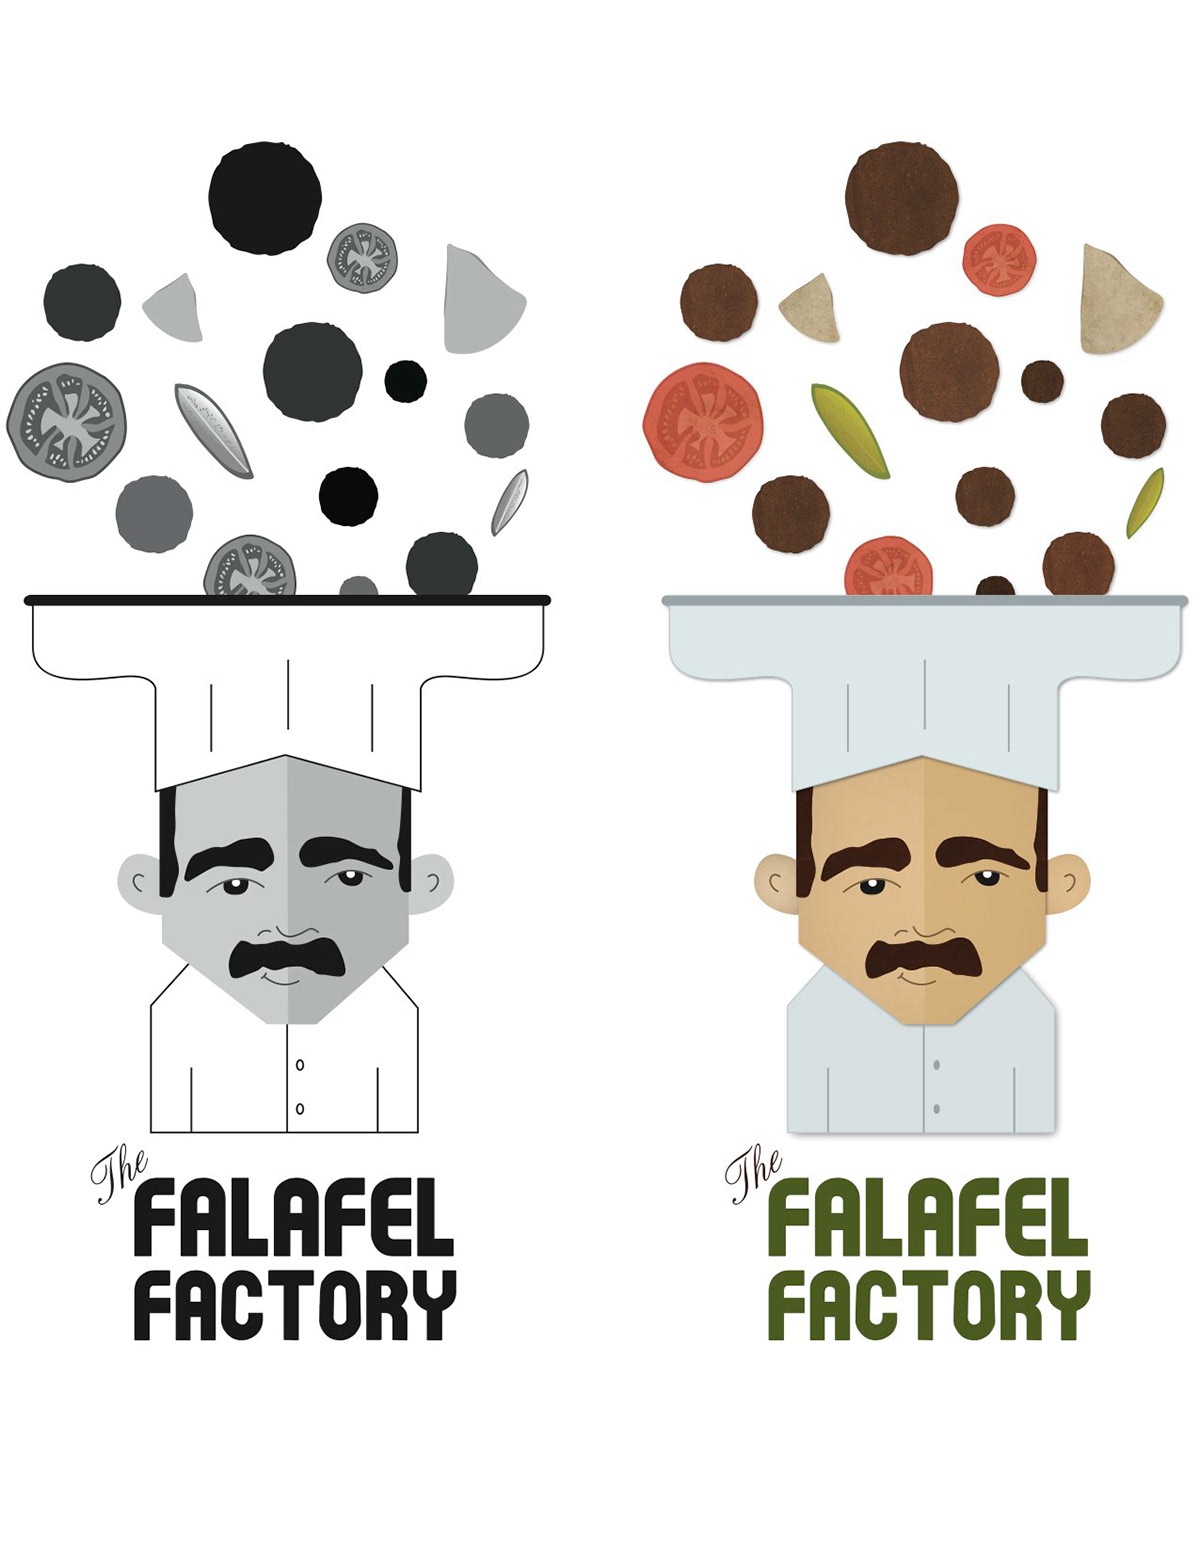 The Falafel Factory